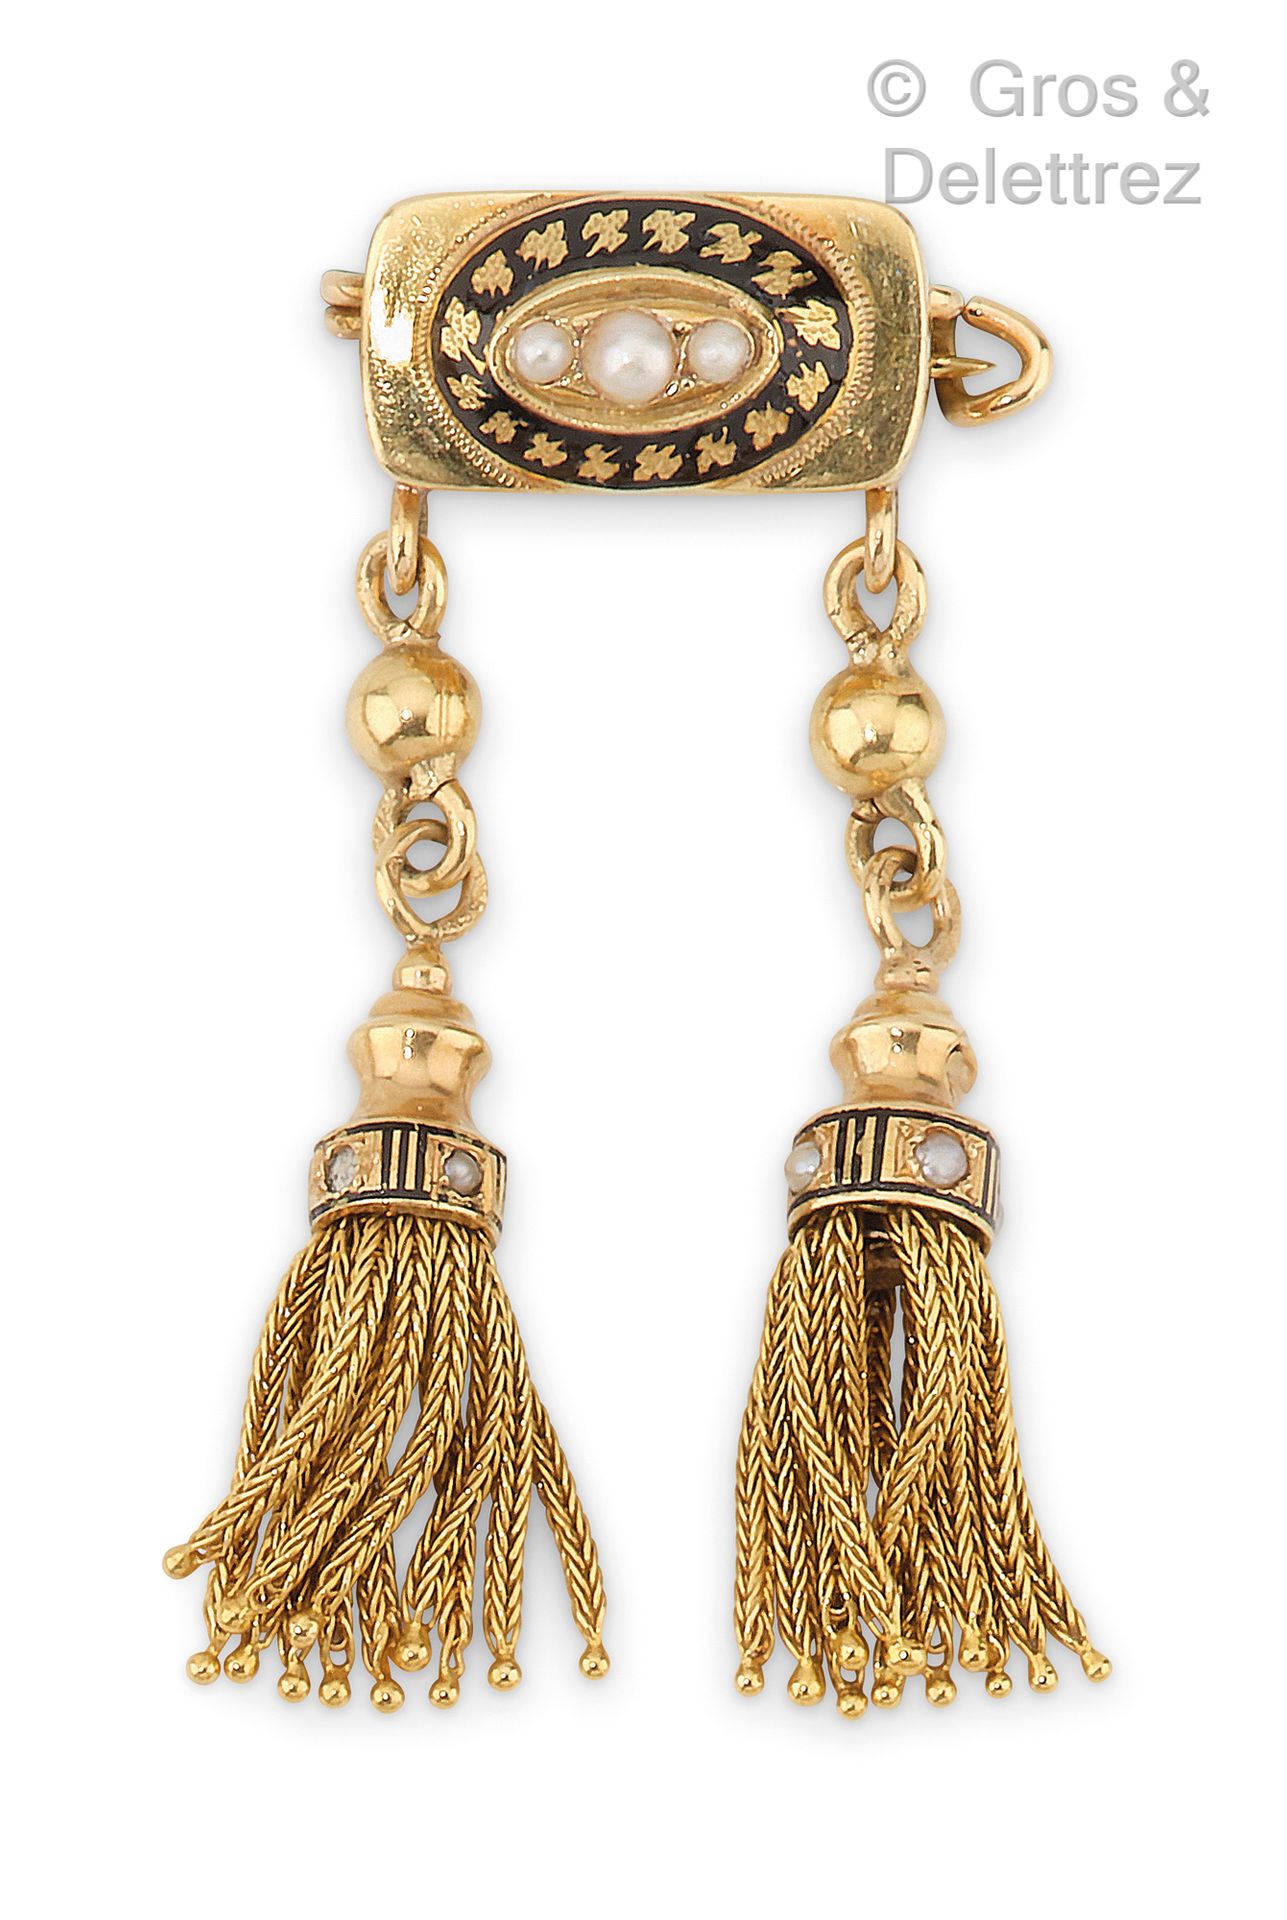 Null 黑色珐琅质黄金胸针，饰有半颗珍珠，手持两个流苏。尺寸：1.7 x 4.5厘米。毛重：7.2克。